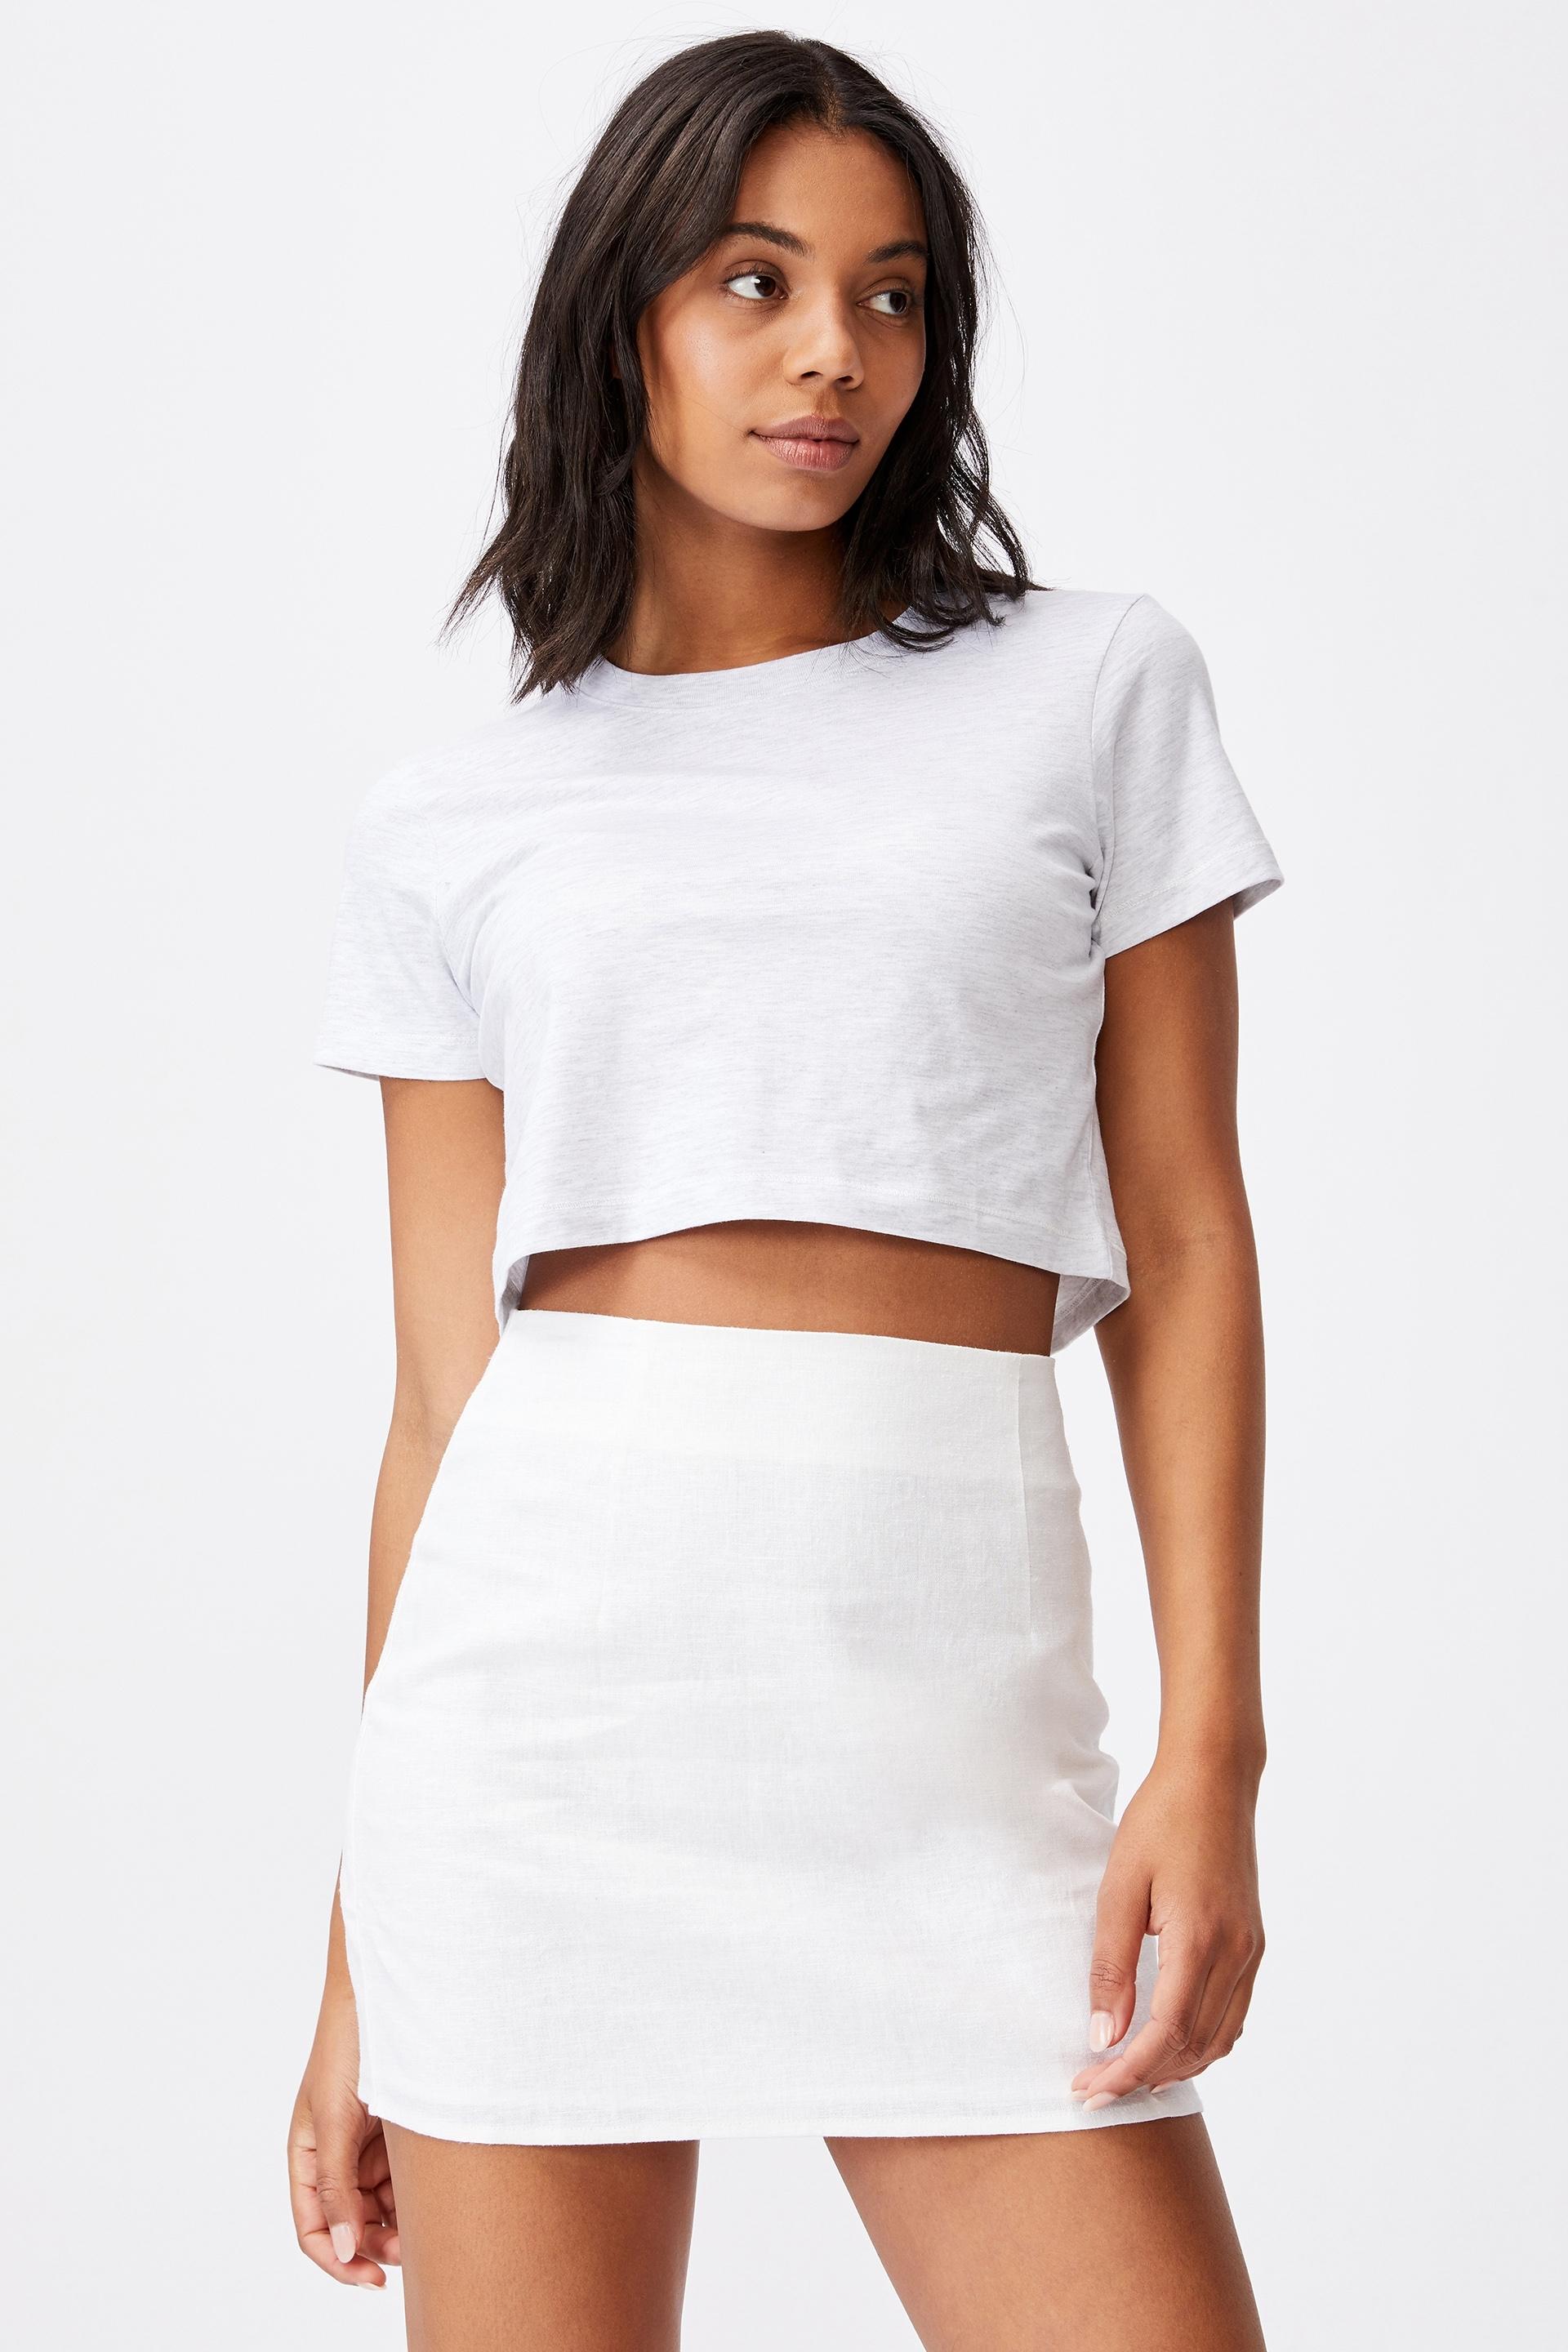 Ultimate a line mini skirt - white Cotton On Skirts | Superbalist.com